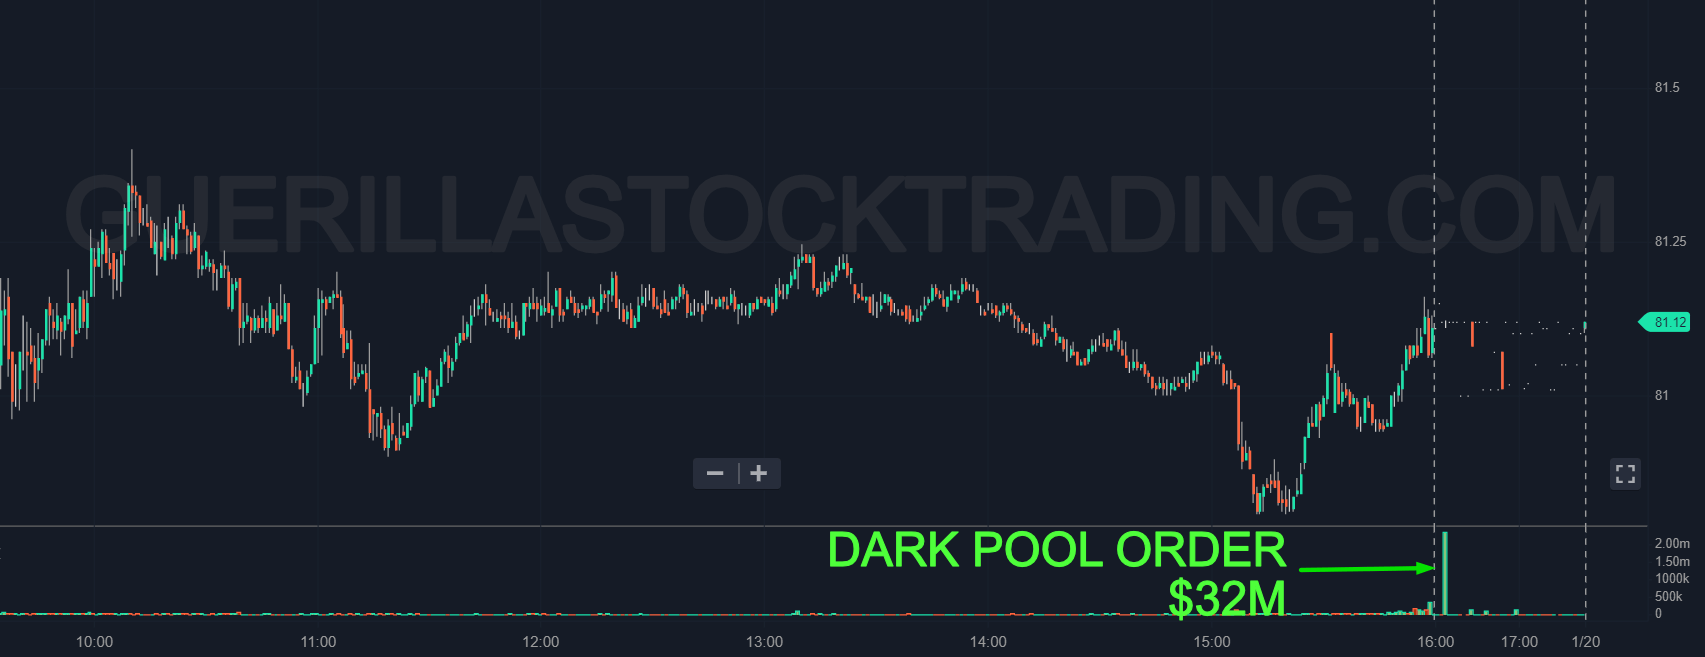 Dark Pool Activity In Citi C Stock â GuerillaStockTrading